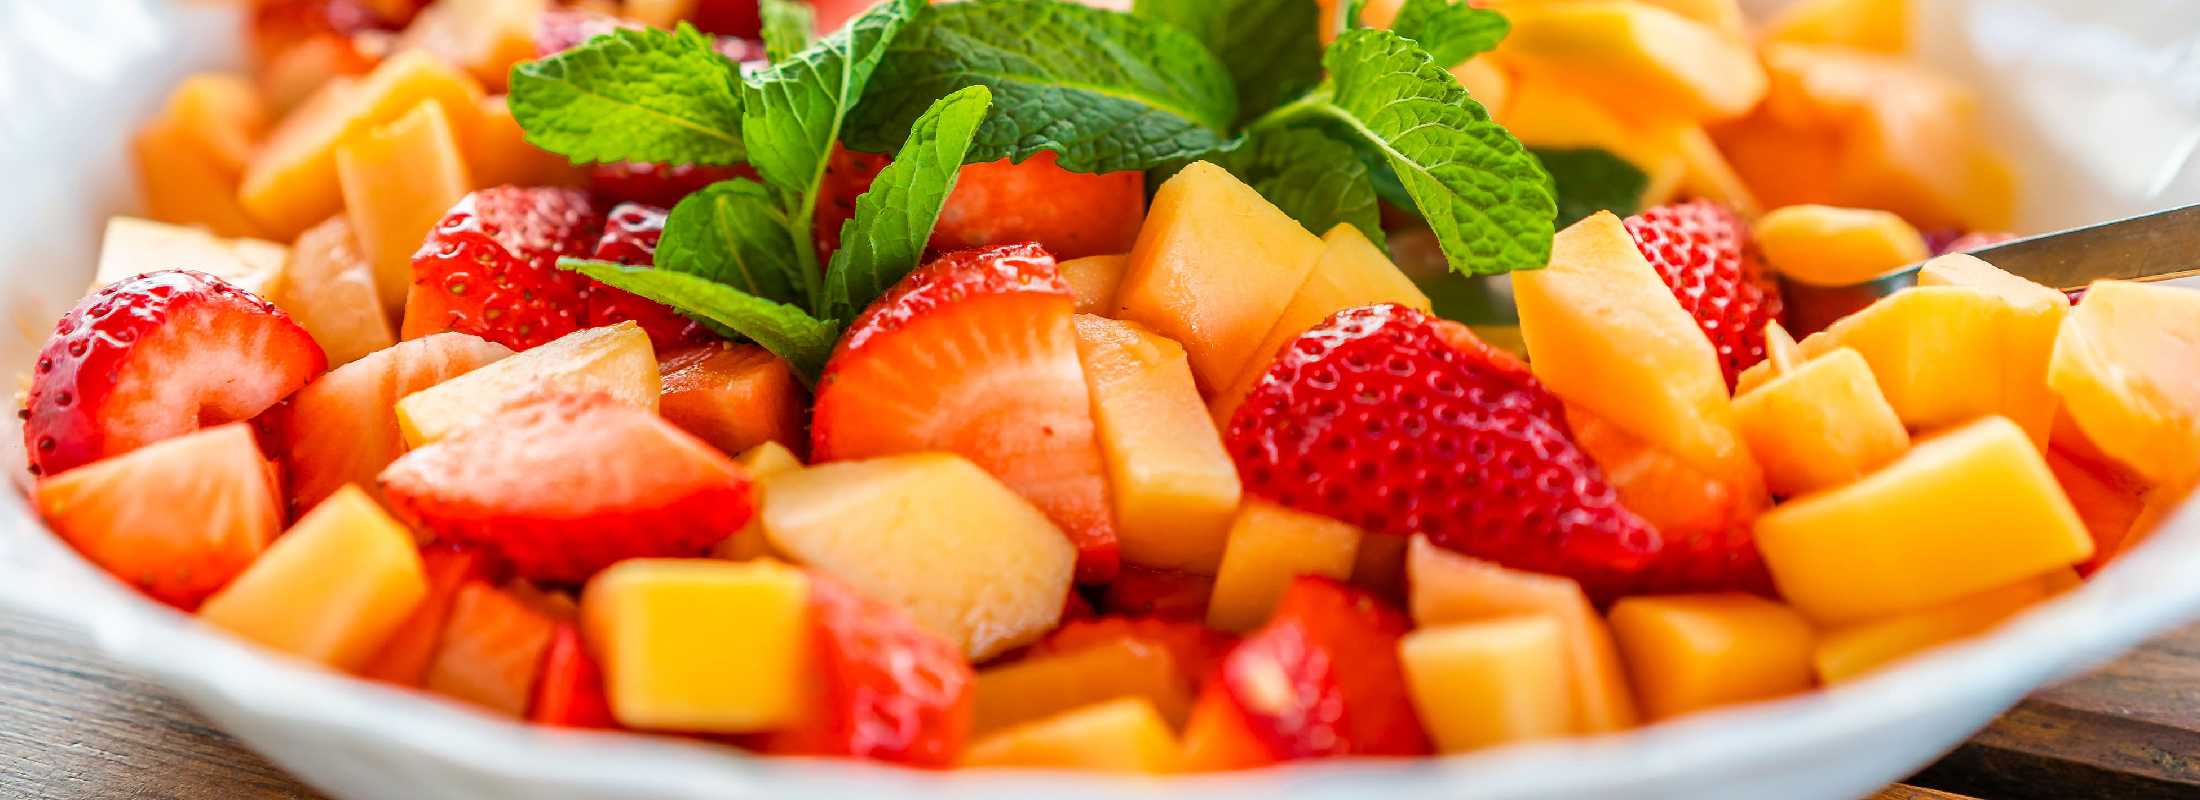 fruta, comida saludable